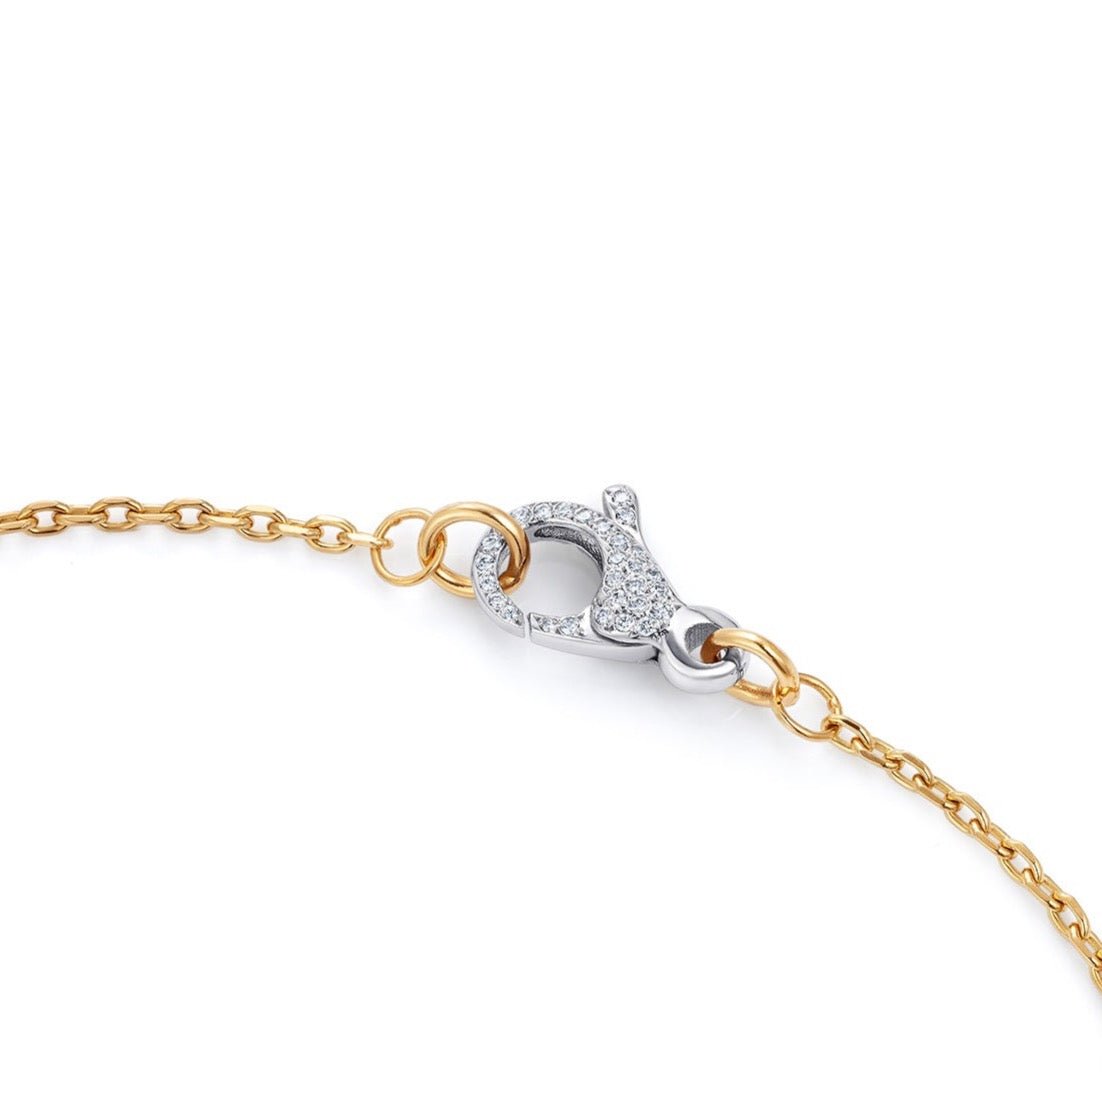 Lozenge diamond necklace in yellow and white gold - Ines Nieto London